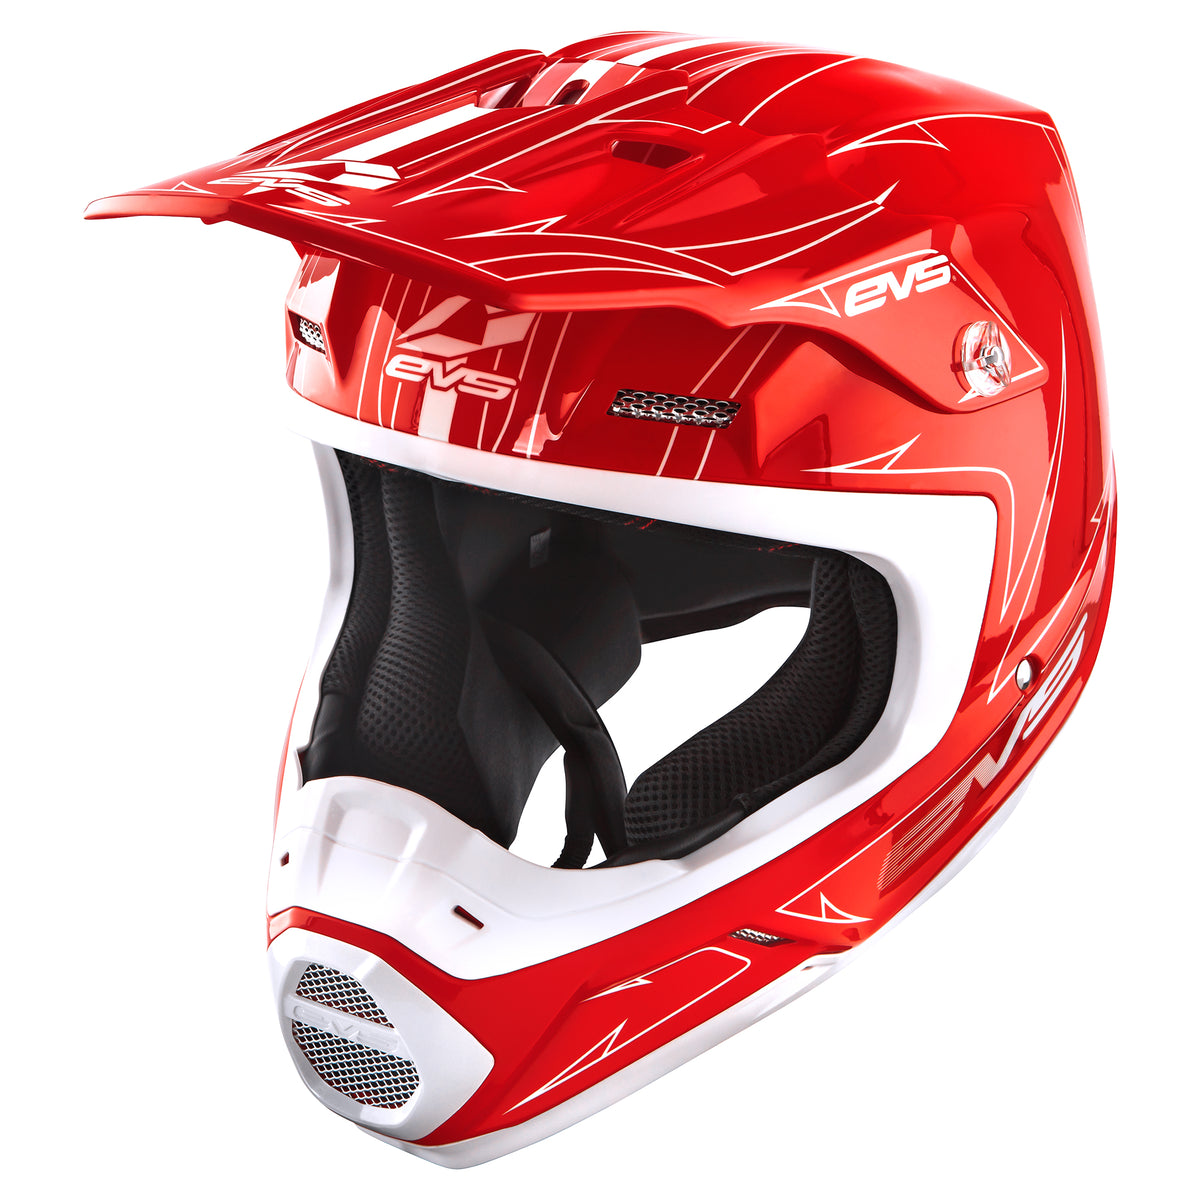 T5 Helmet - Pinner Red - EVS Sports